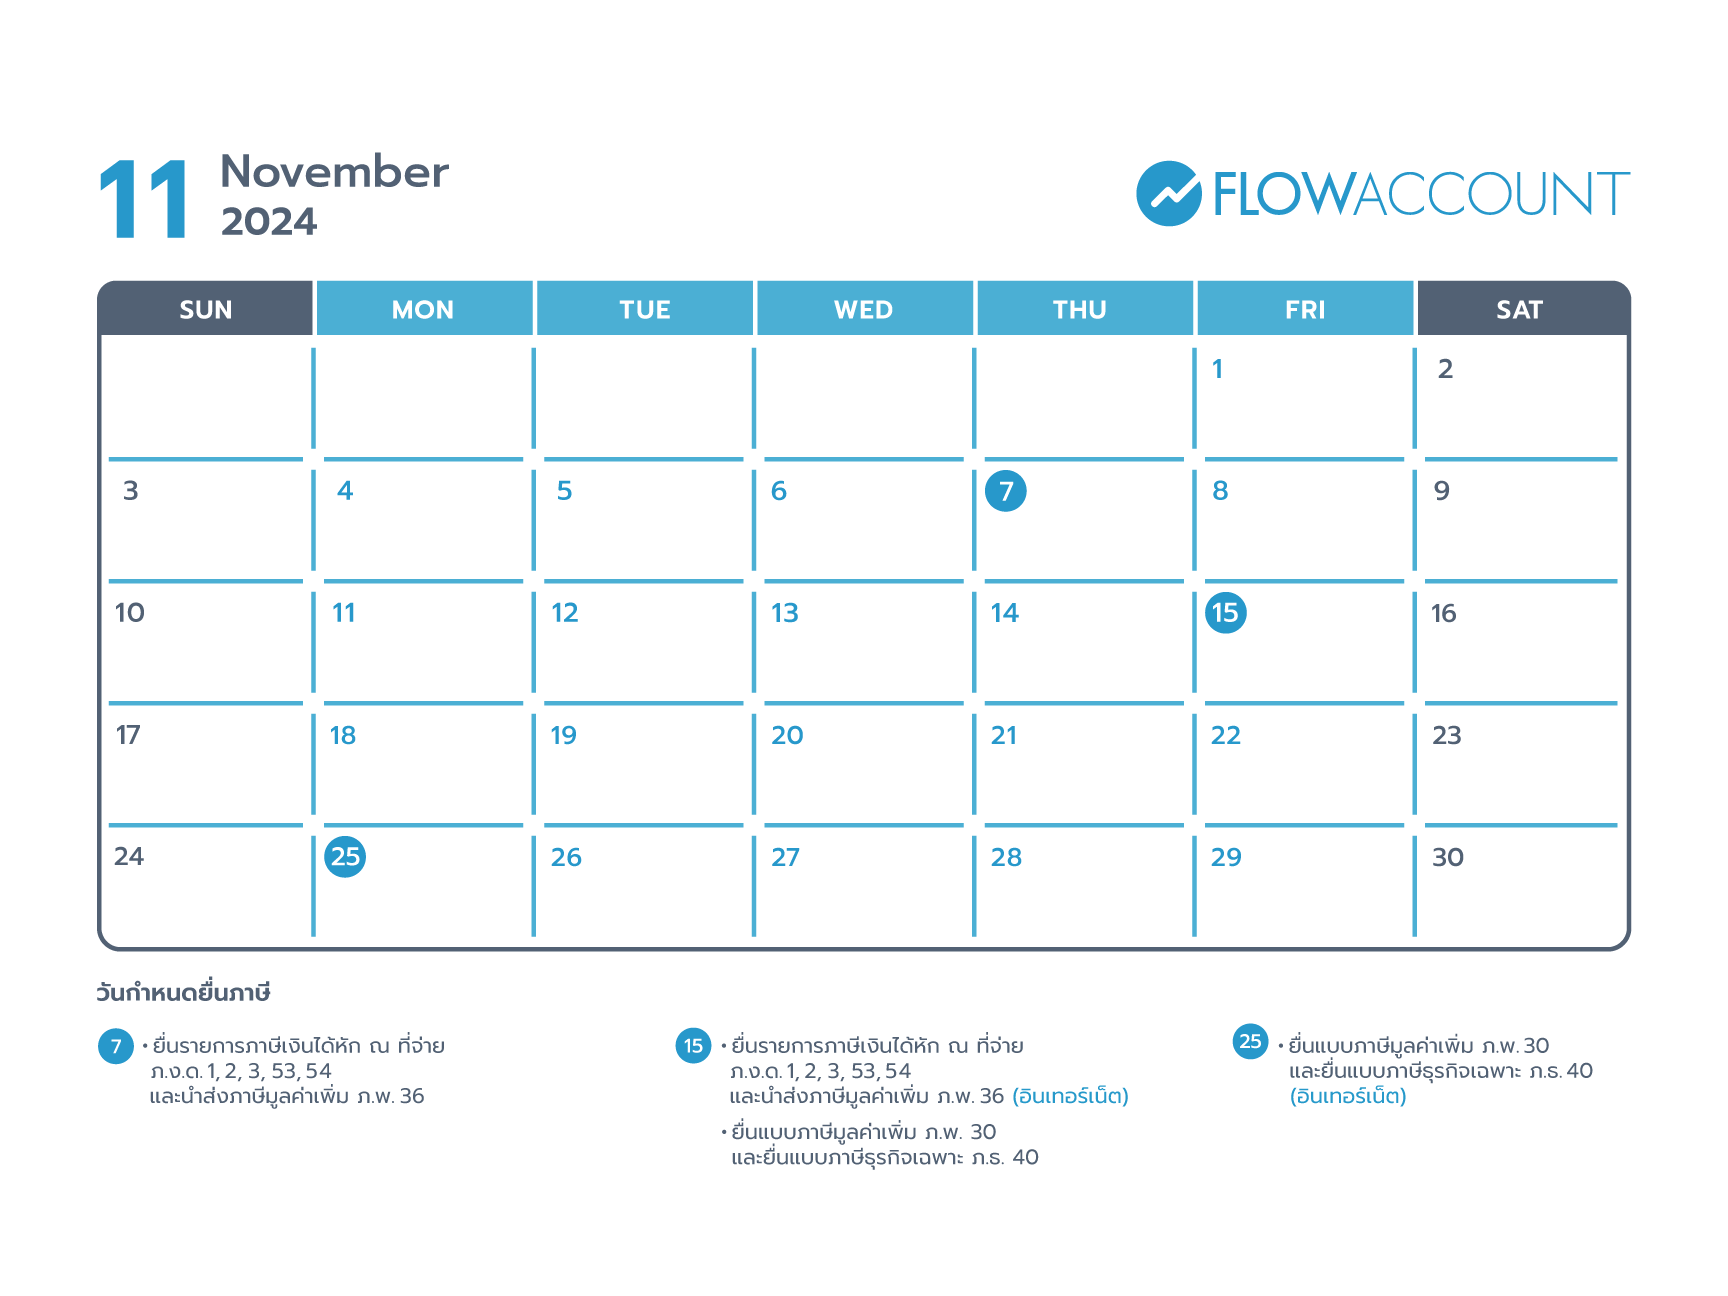 Tax calendar on November 2024